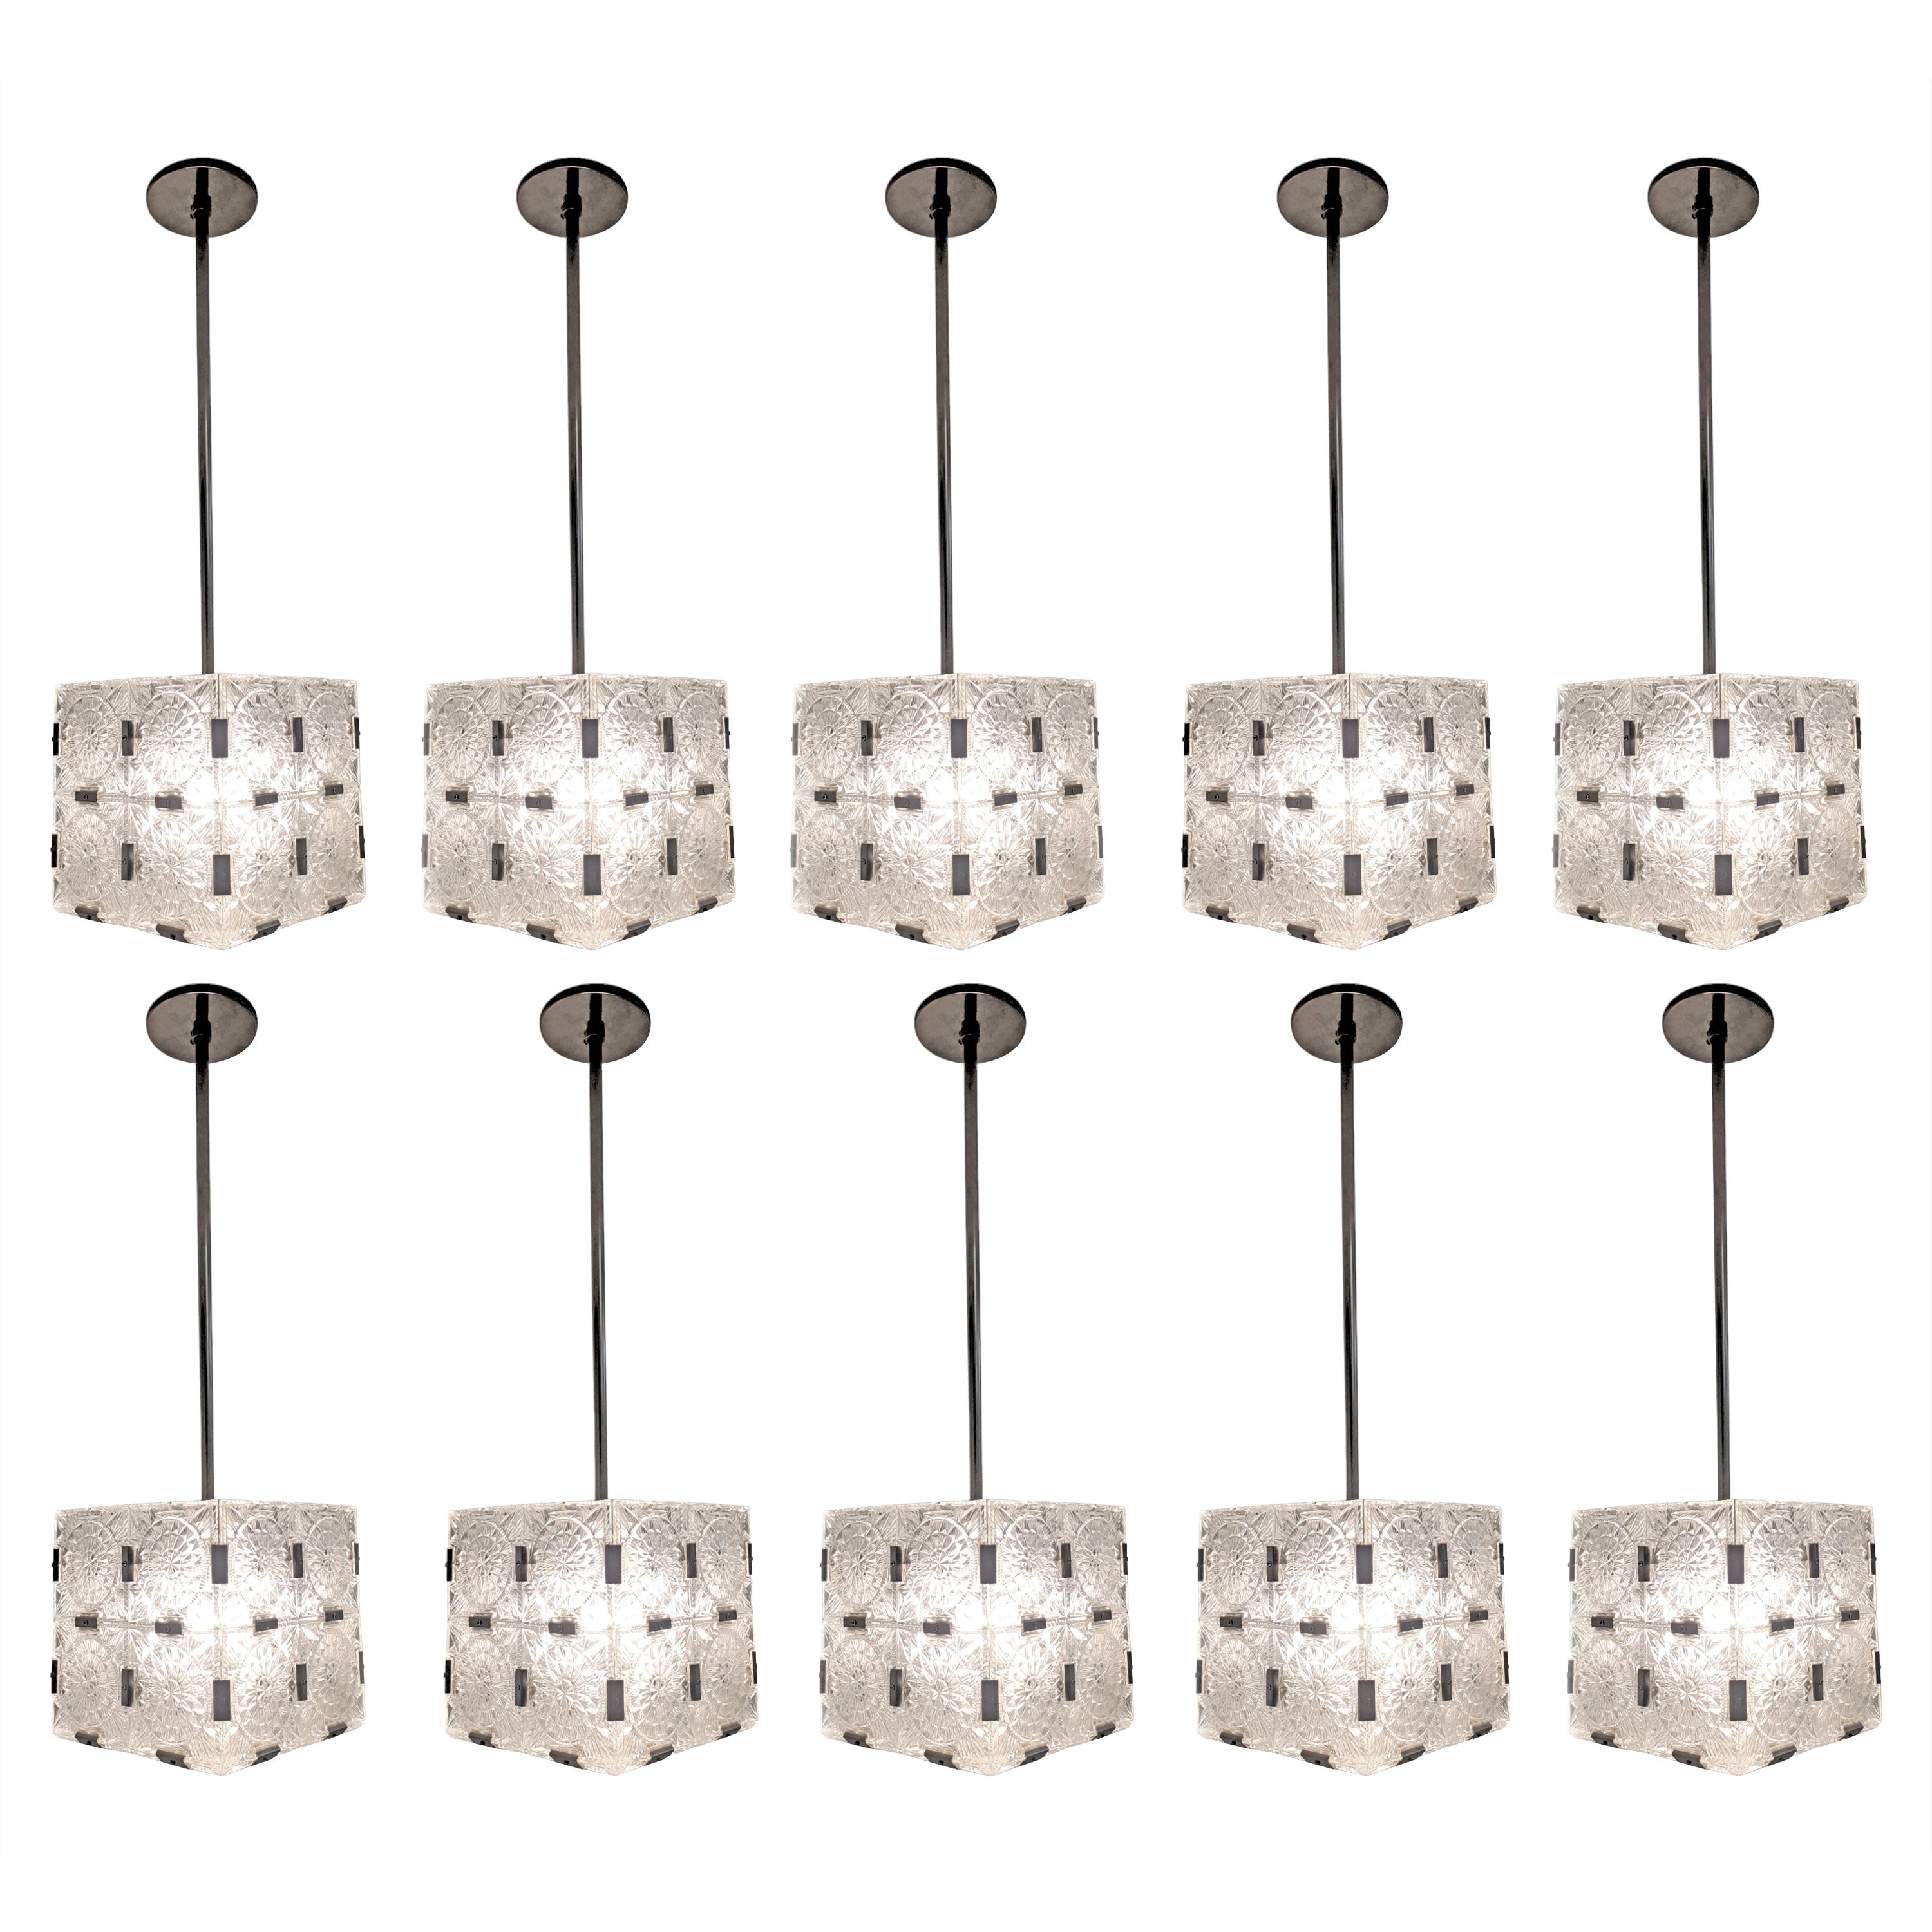 Lot de dix lampes suspendues originales en forme de cube, en verre avec des clips nickelés